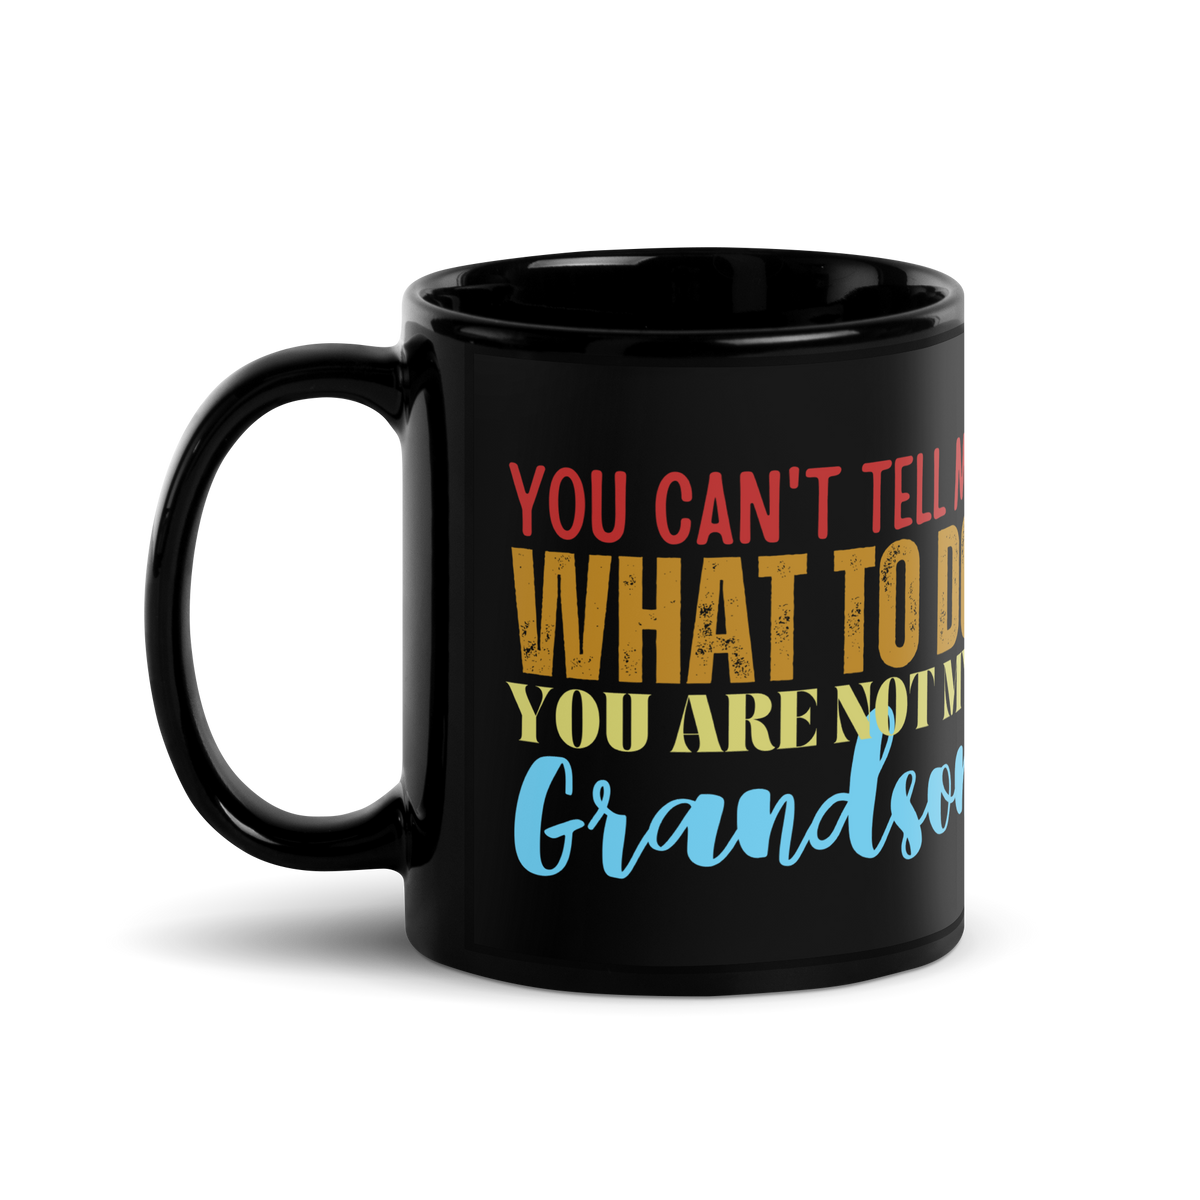 Coffee lovers, Granddad Mug, Granddad coffee mug, granddady tea mug, grandmom mug, gift for her, gift for him, gift for grandmom, gift for granddad, new papa gift, funny grandma mug, funny granddad mug, grandfather mug, you can't tell me what to do you are not my grandson, mug, coffee mug, cup, tea mug